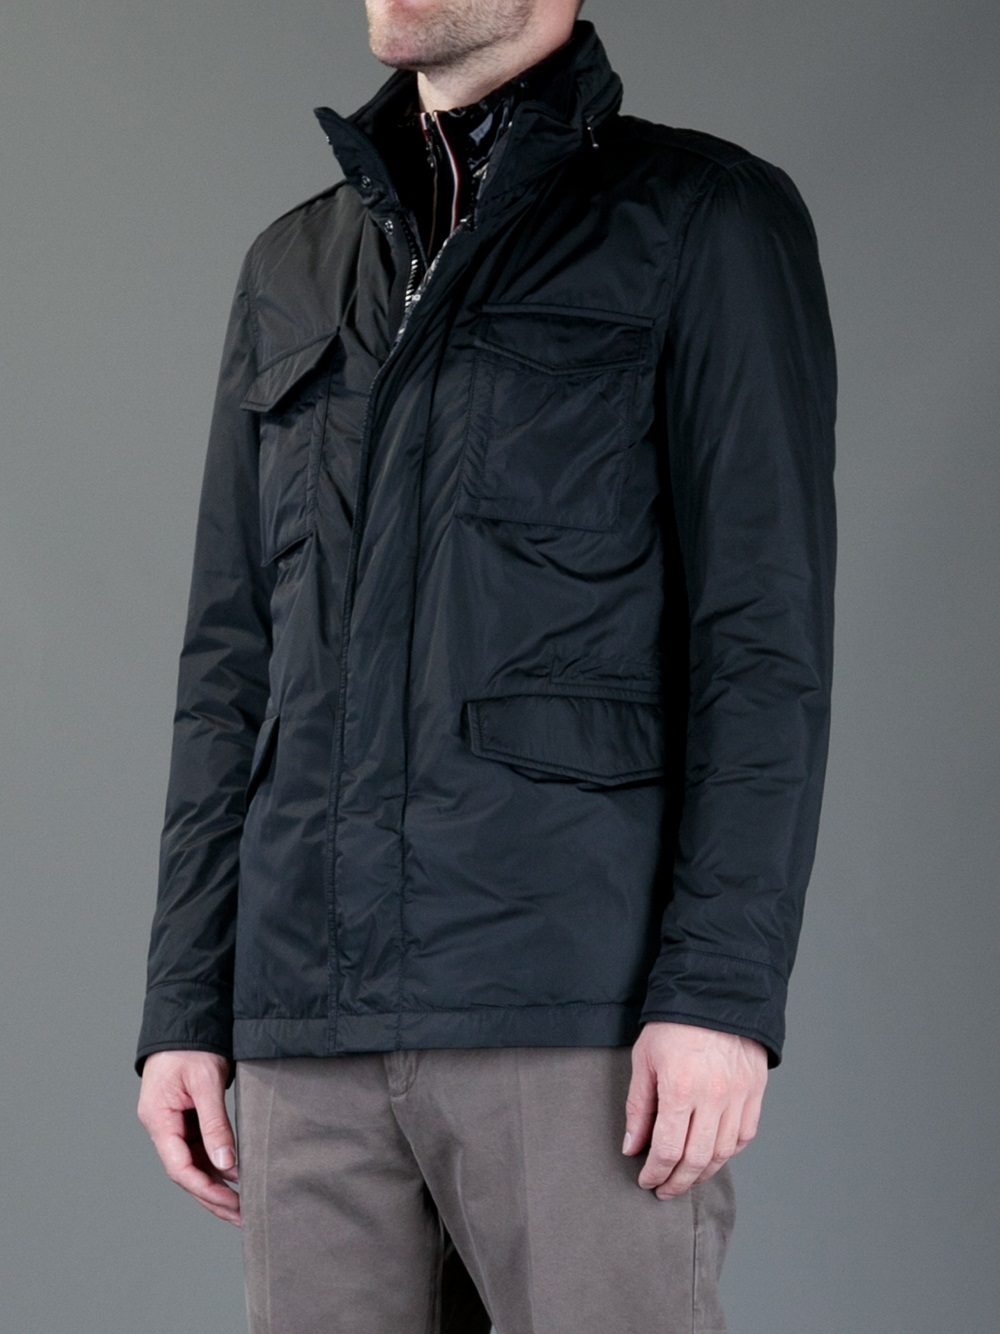 Moncler Hector Field Jacket in Black for Men - Lyst